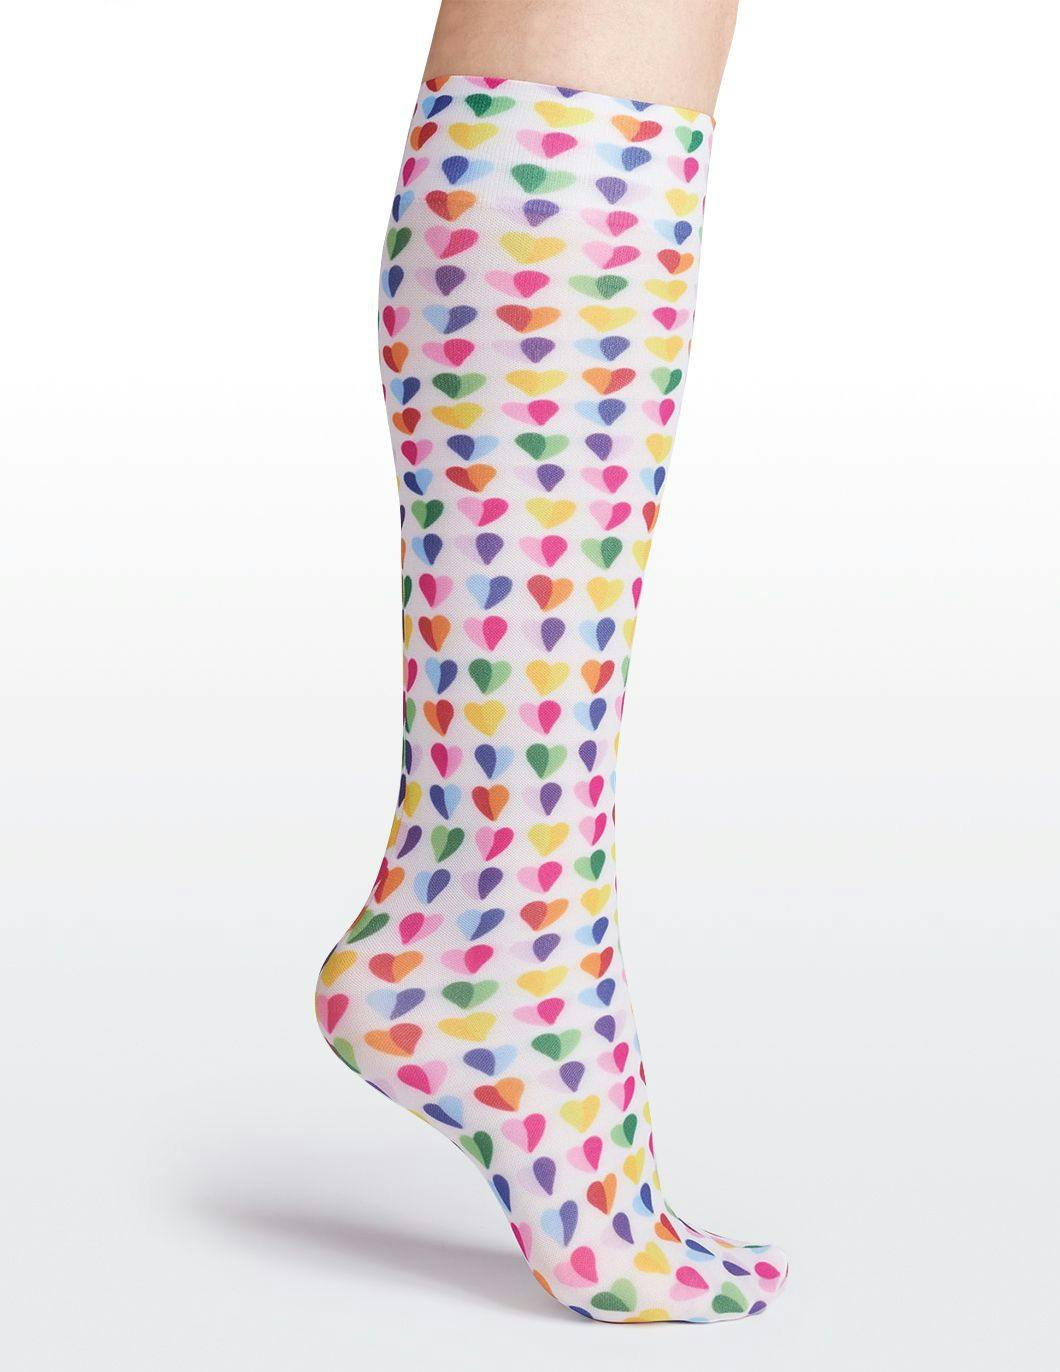 cutieful-compression-socks-sweethearts-print